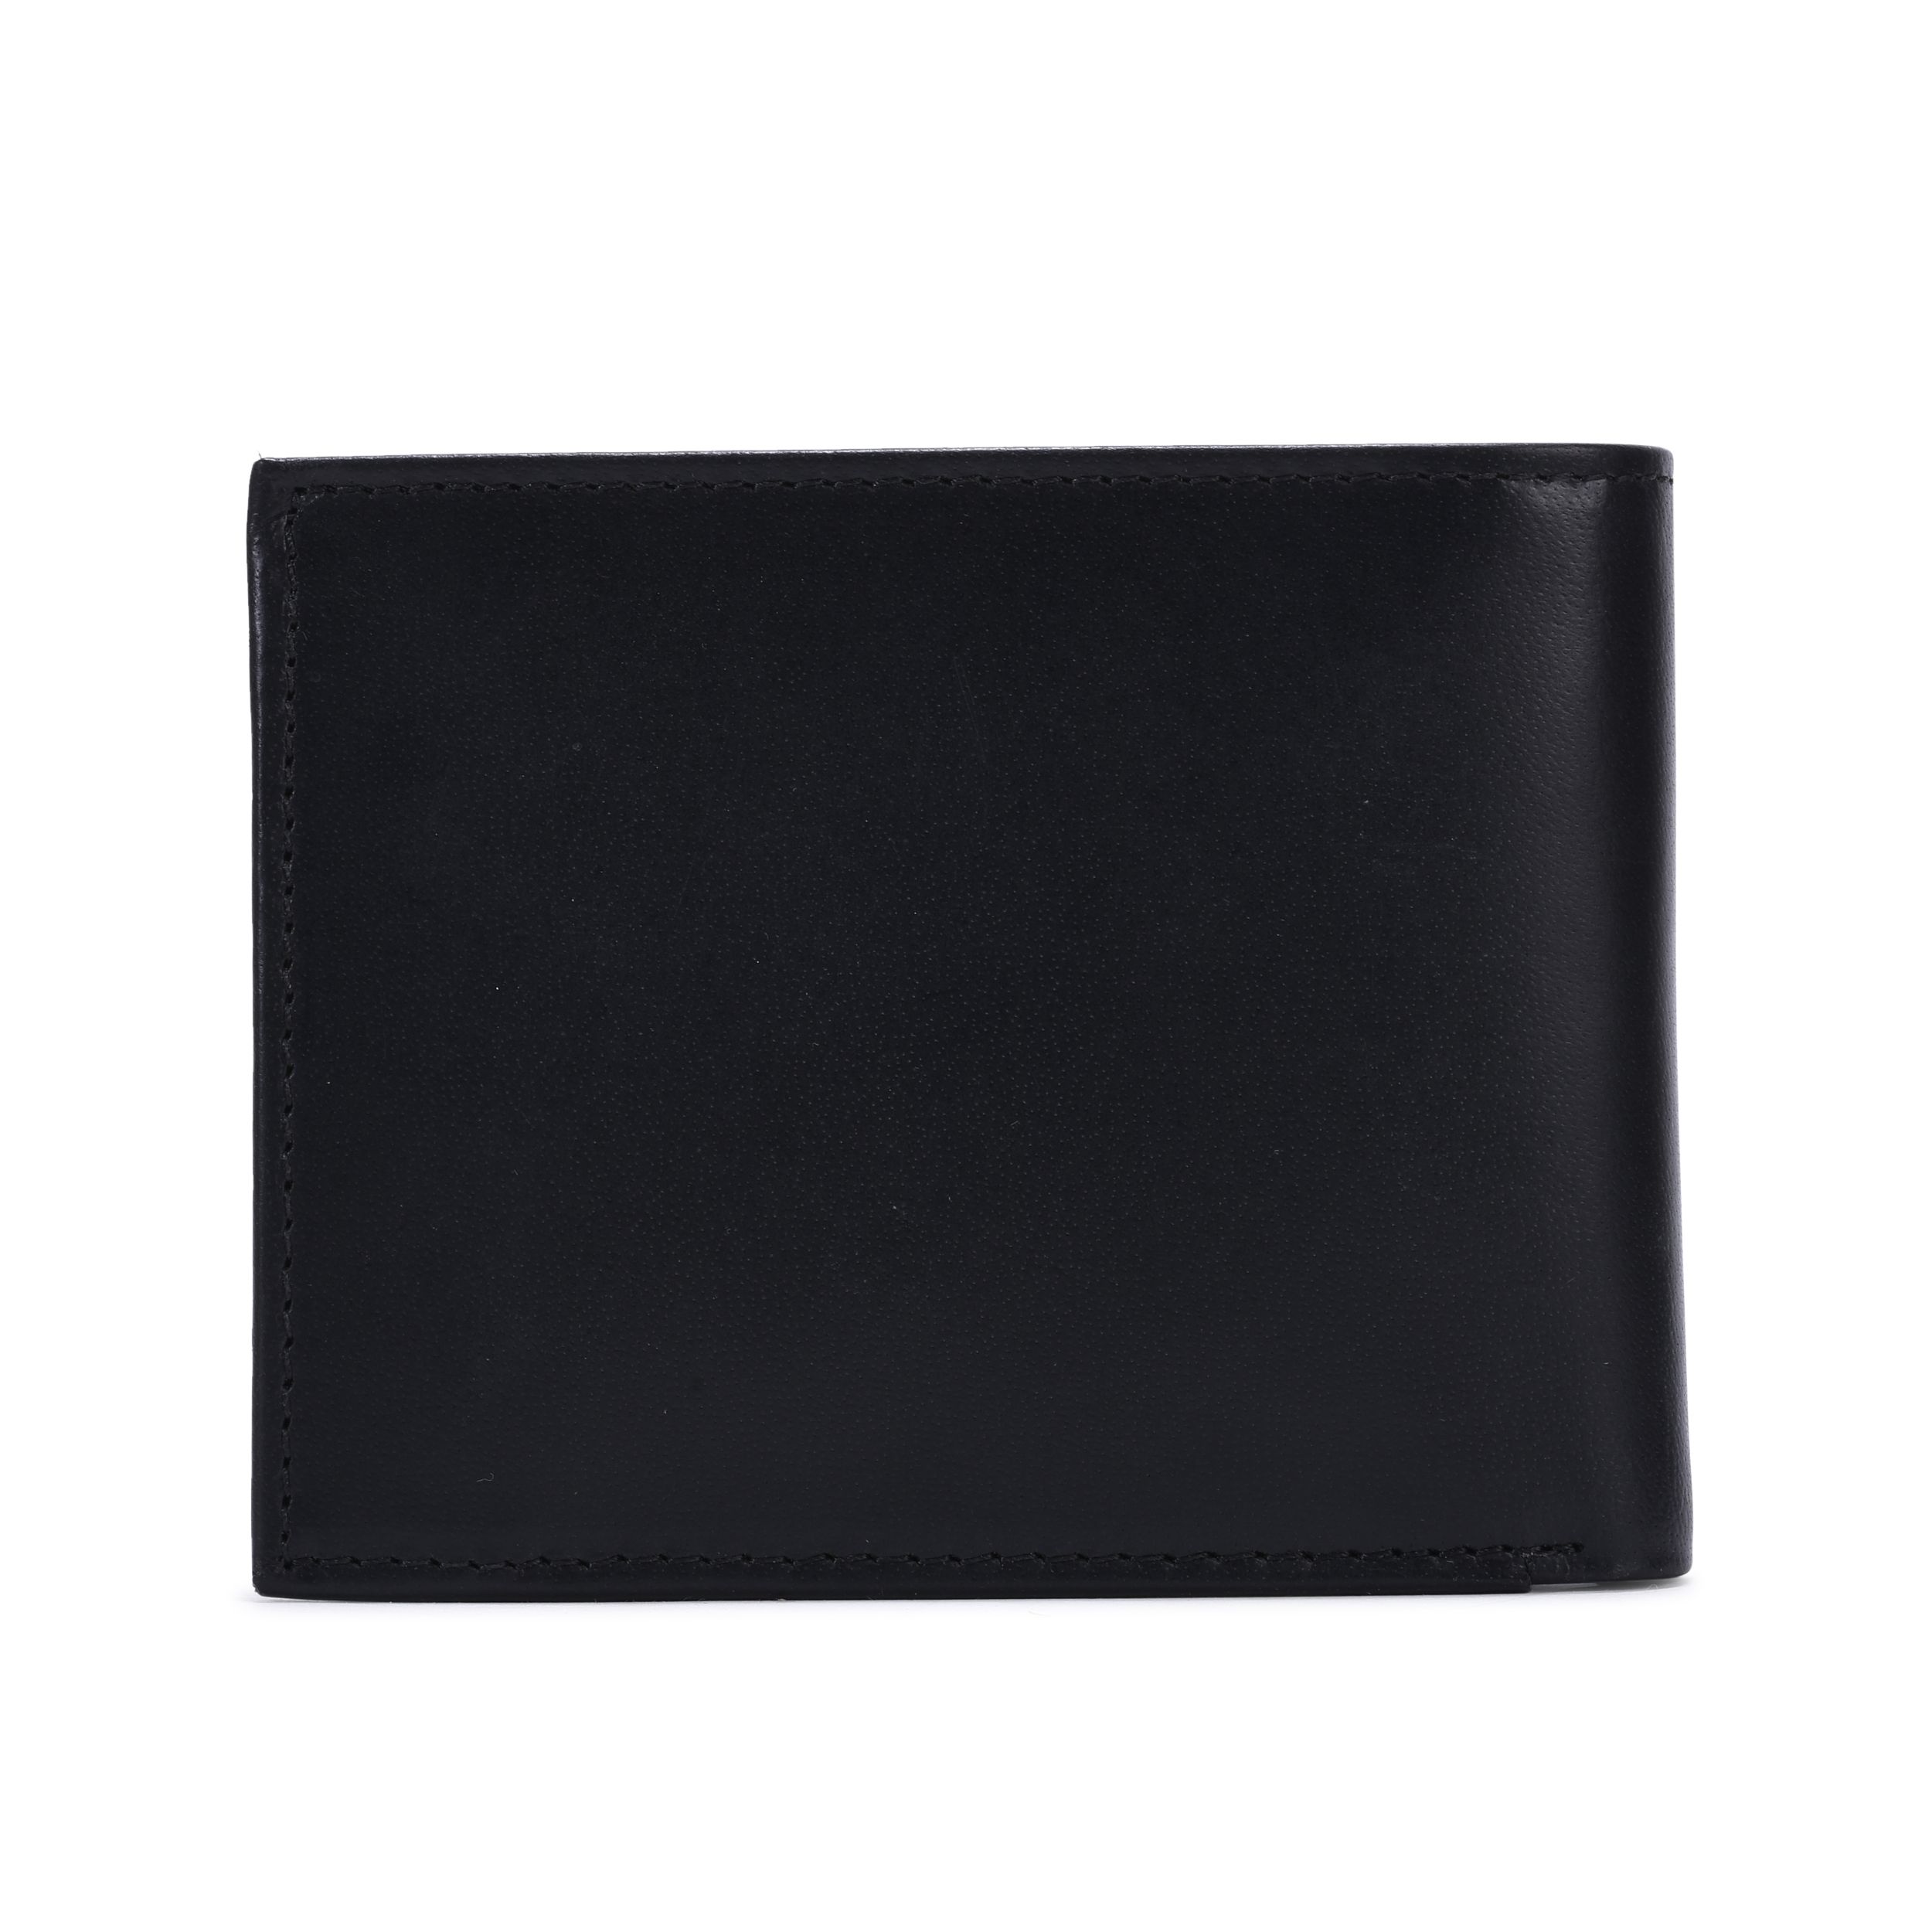 BLACK Leather Wallet